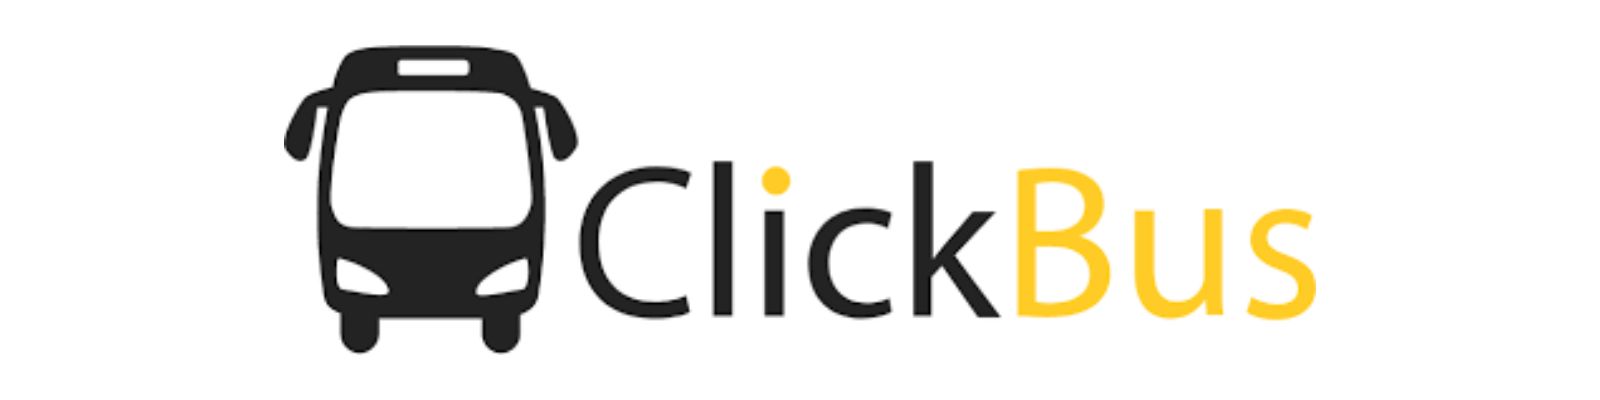 ClickBus é confiável? Descubra Agora Mesmo!